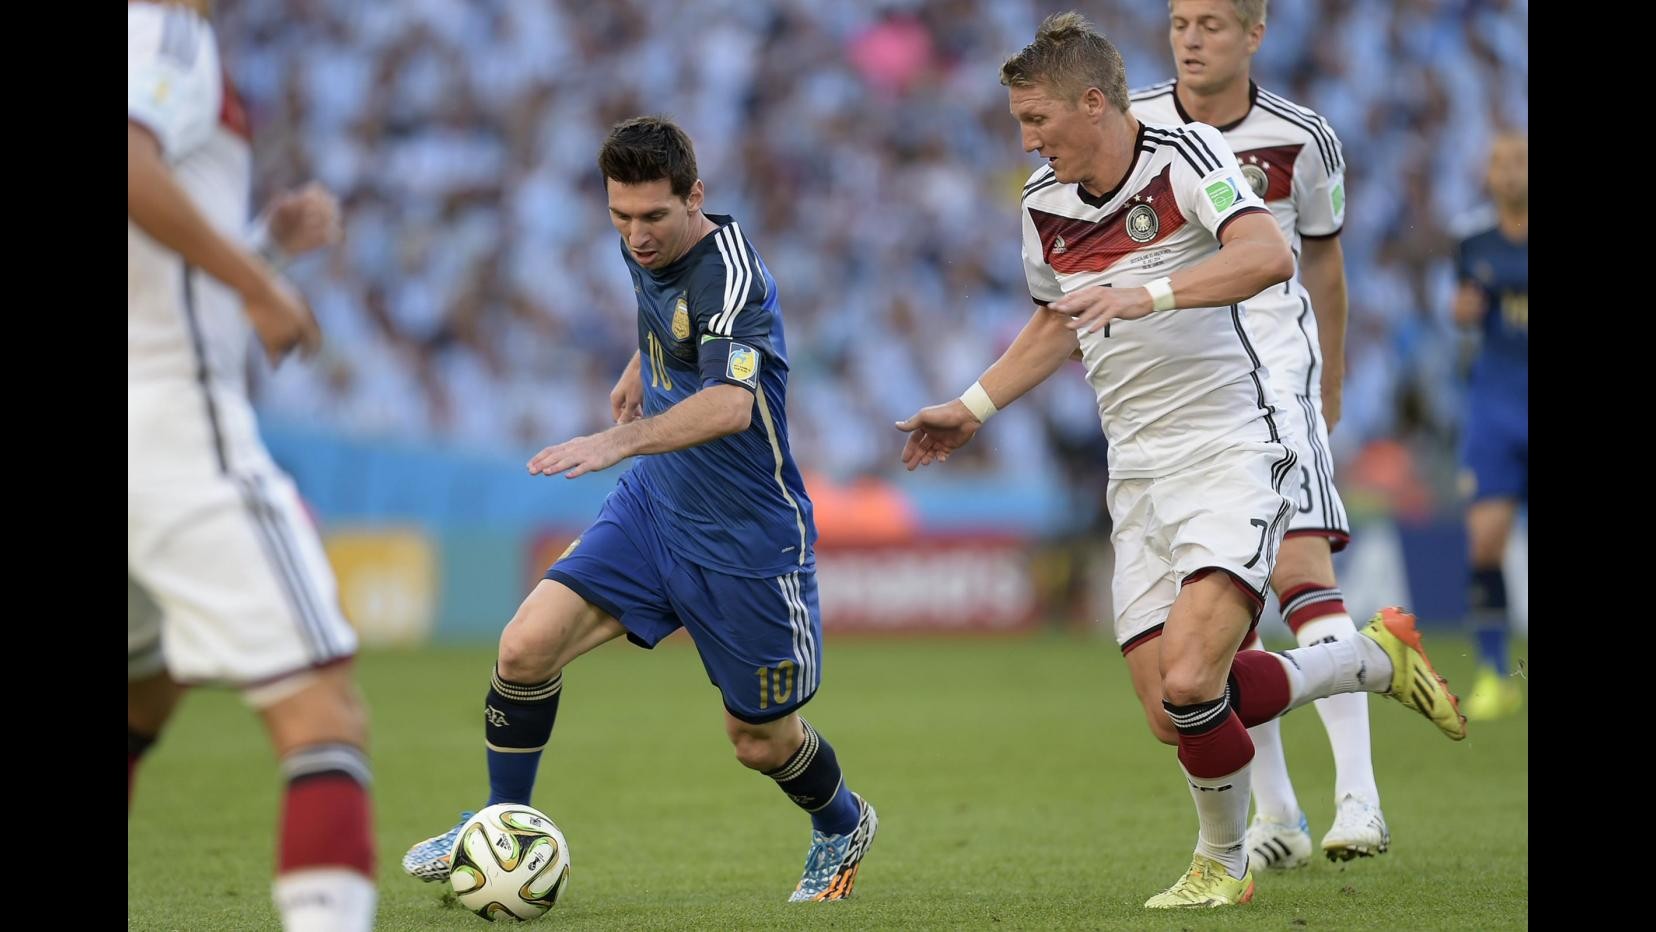 Mondiali 2014, Germania-Argentina ai supplementari: 0-0 dopo 90 minuti